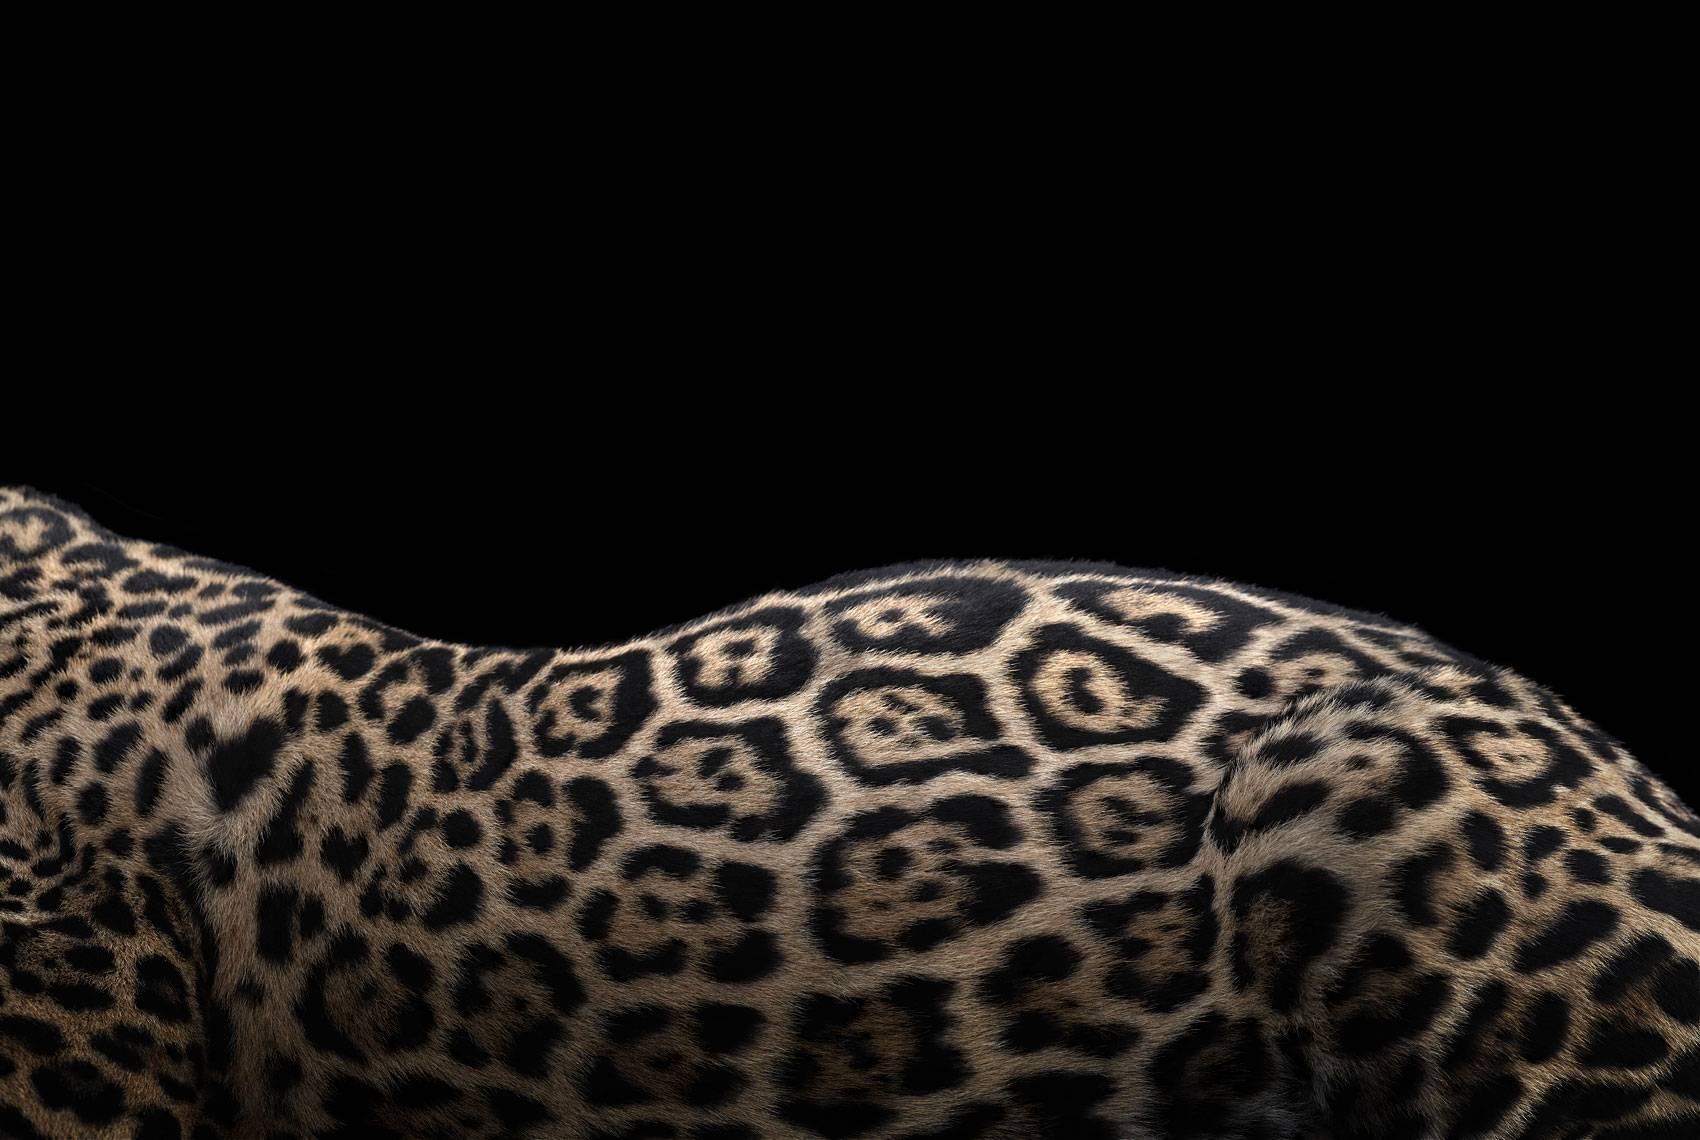 Brad Wilson Color Photograph - Jaguar #2, Los Angeles, CA, 2016